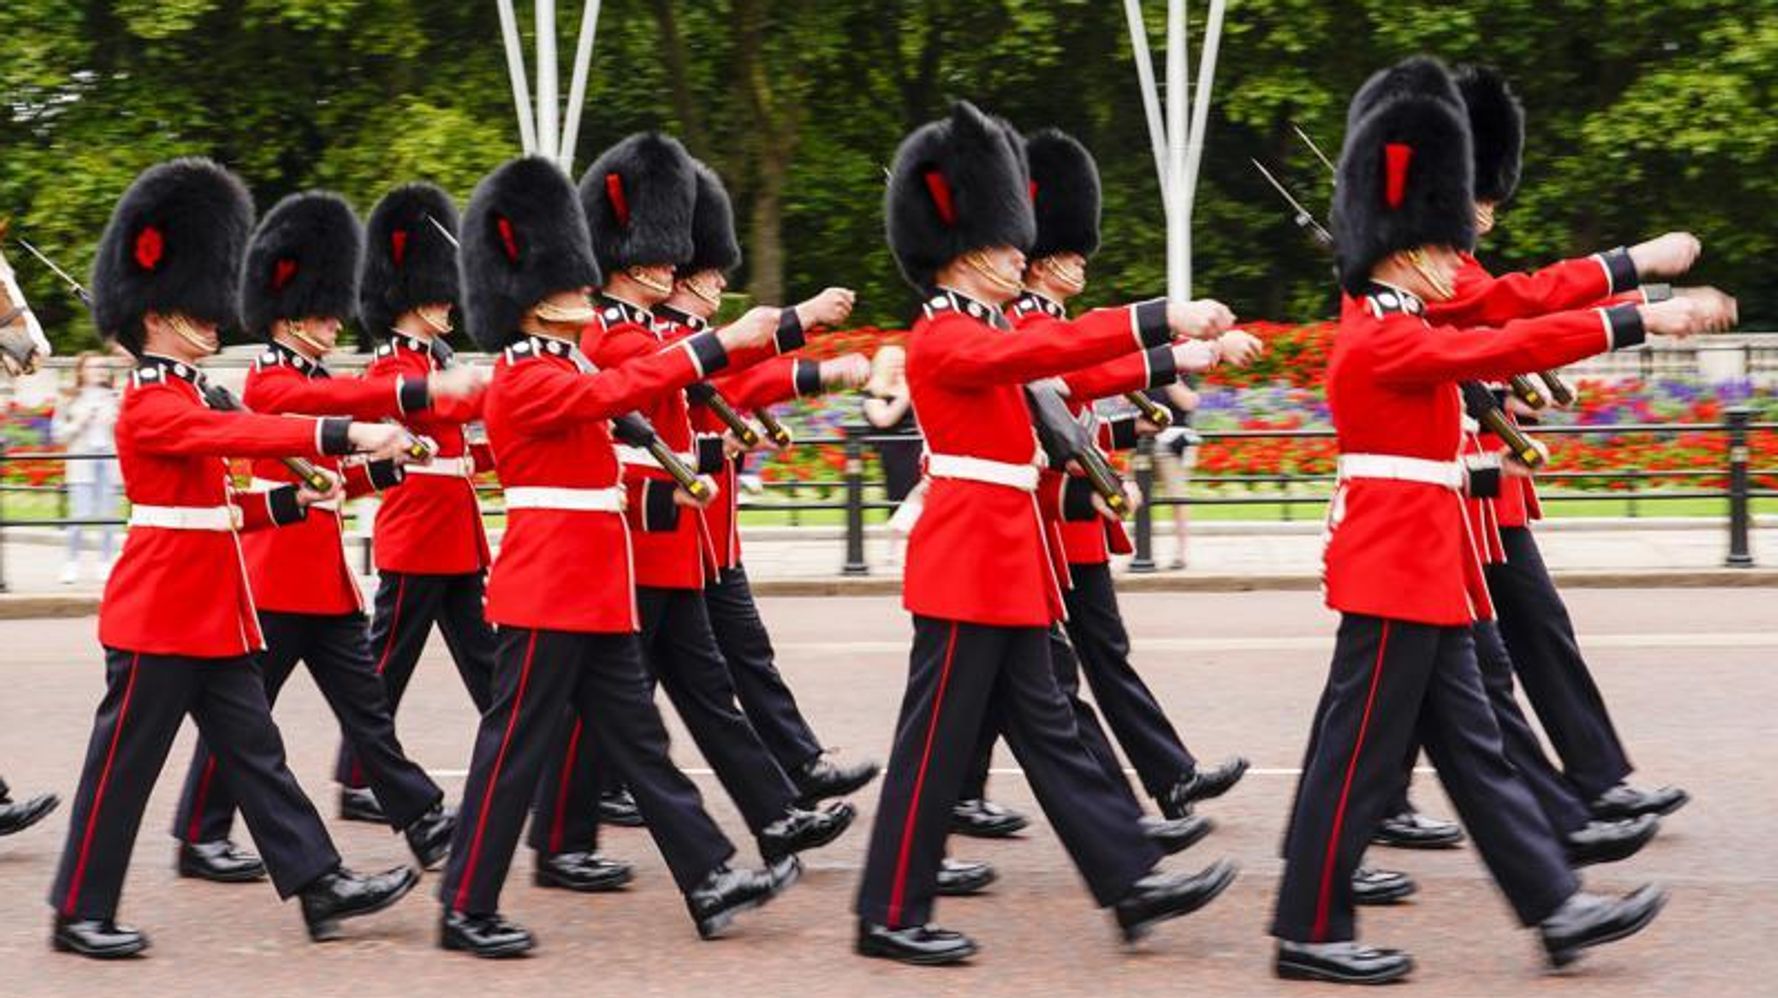 Buckingham Palace Guard Ceremony Returns After COVID Hiatus